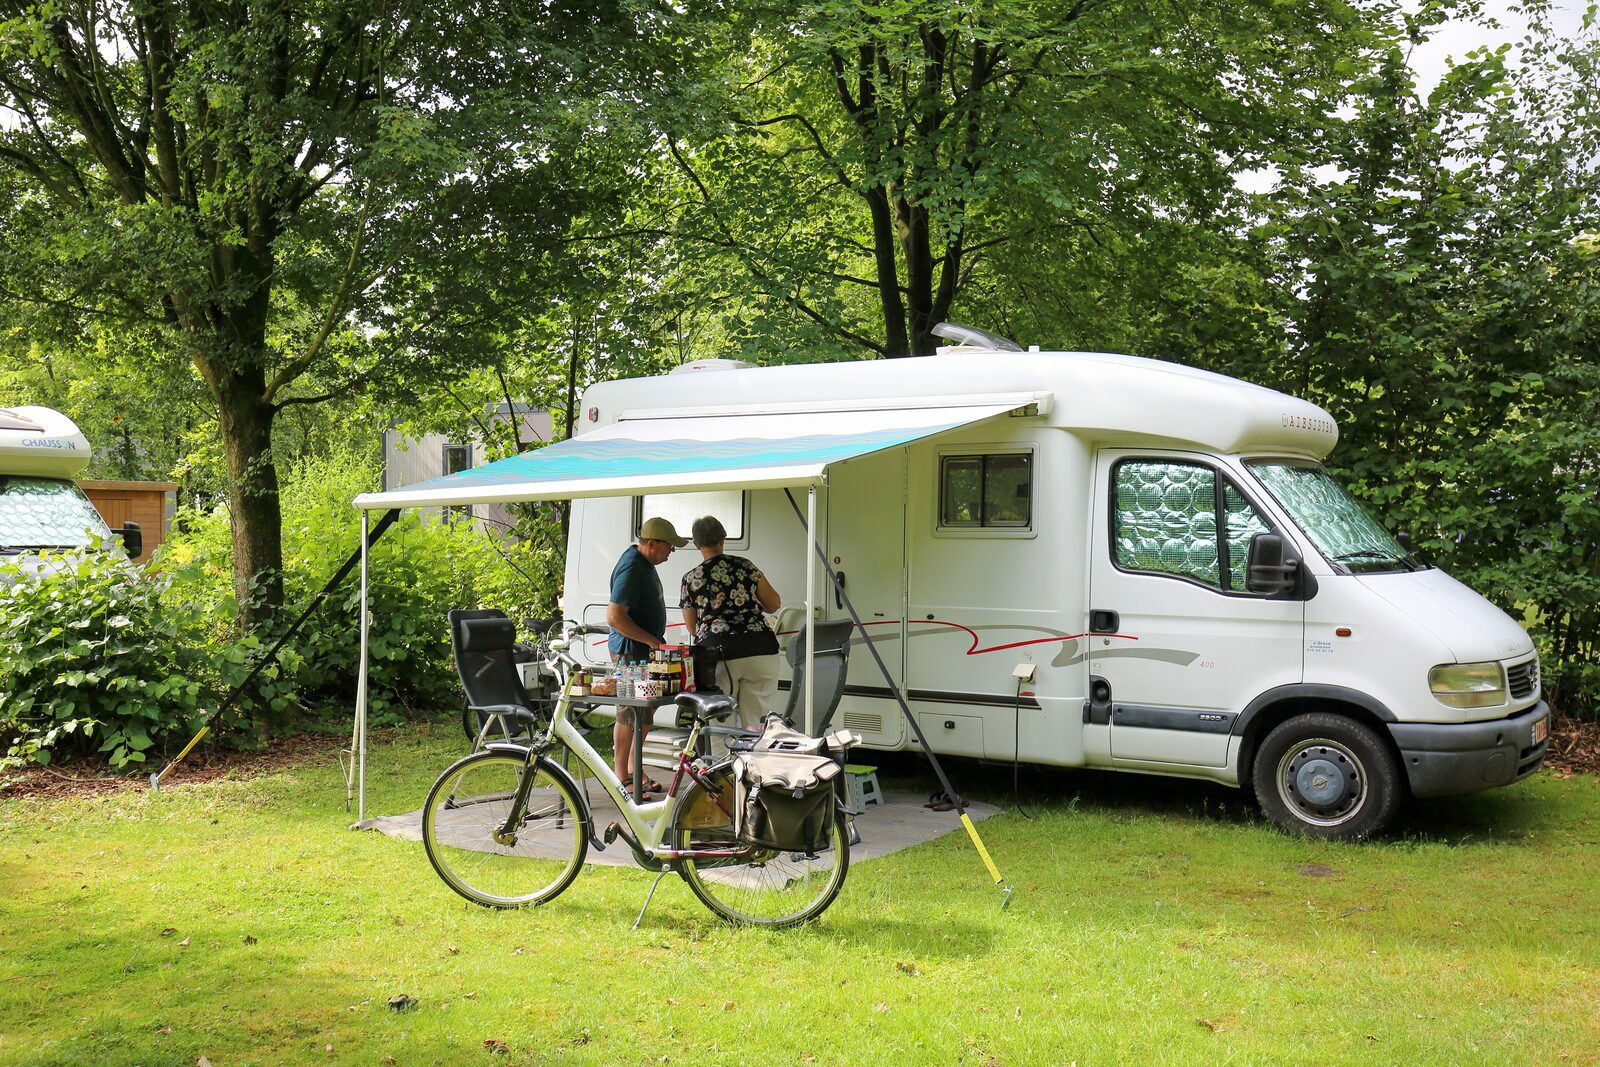 Camping Baalse Hei in Turnhout